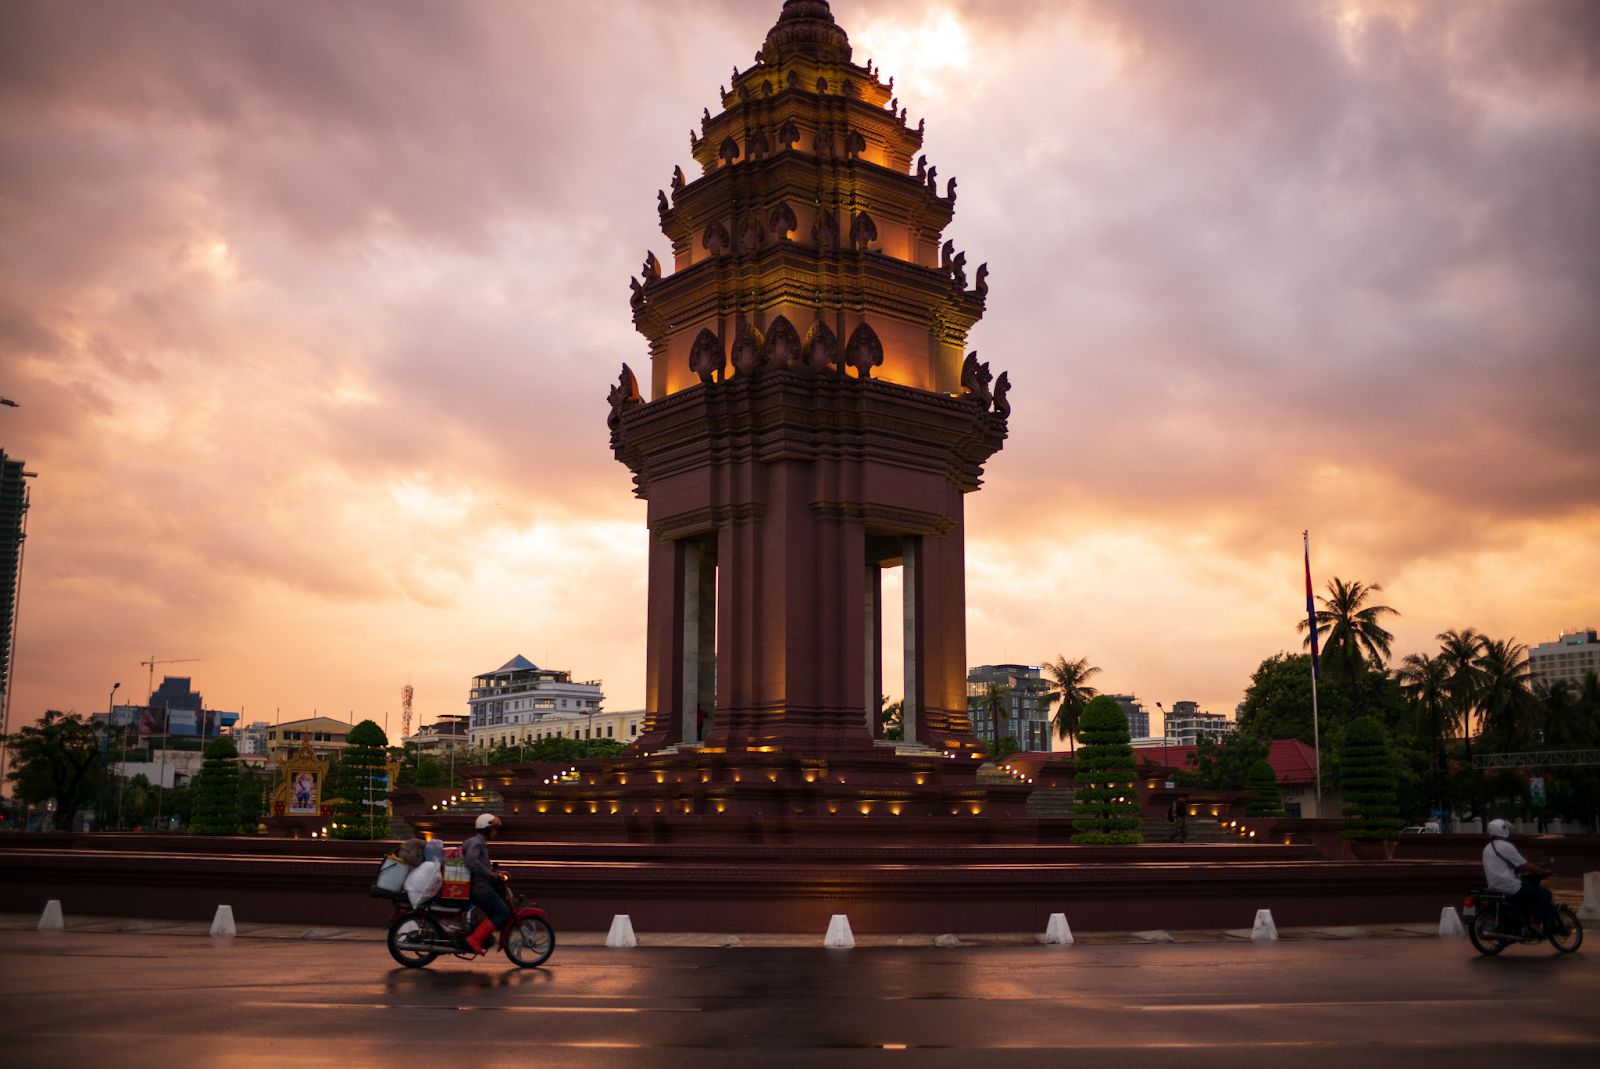 Day 11 - 13: Phnom Penh, Cambodia